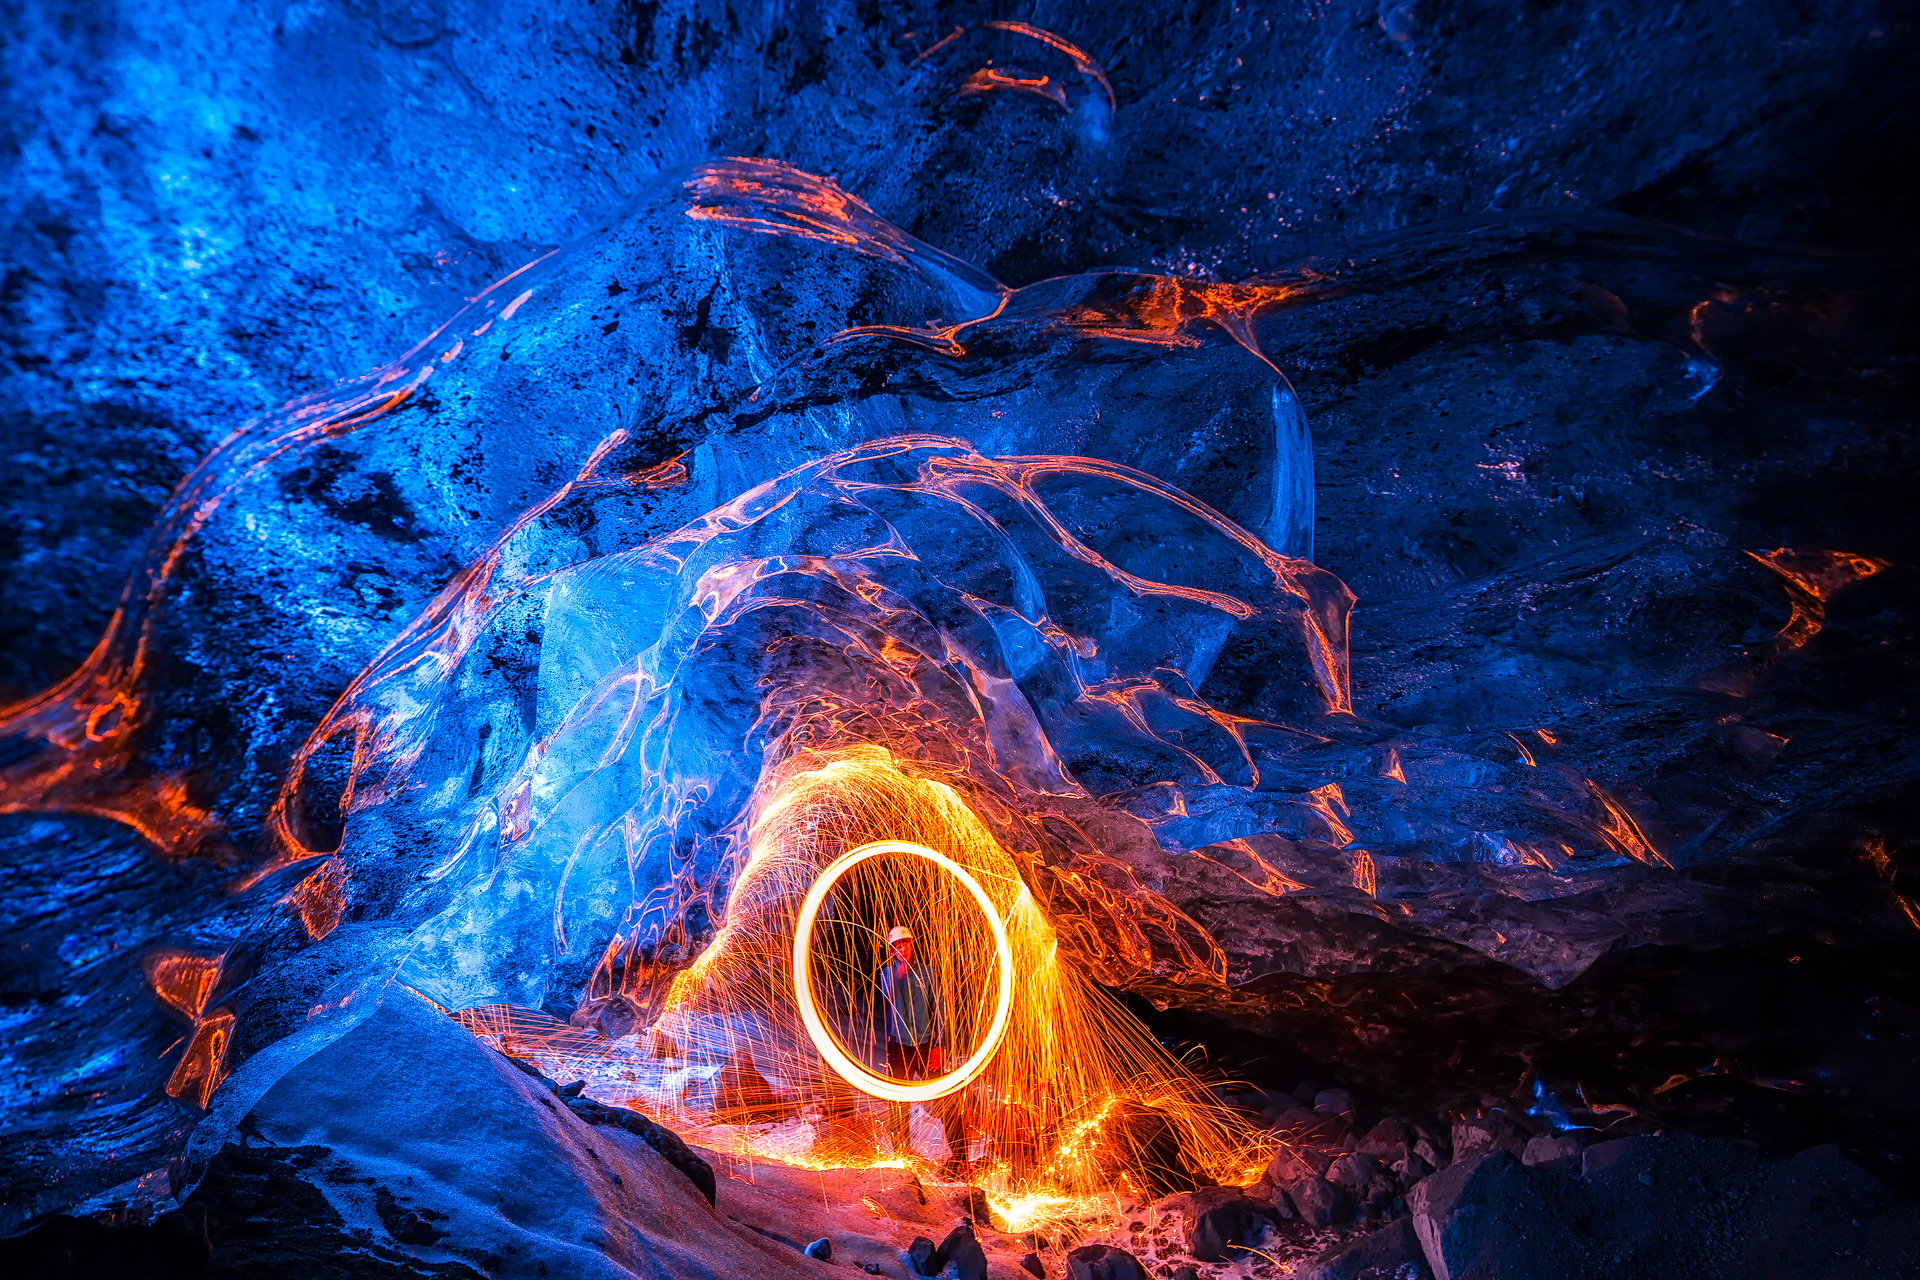 Andrei Duman Ice Cave Sparkler, Iceland 27